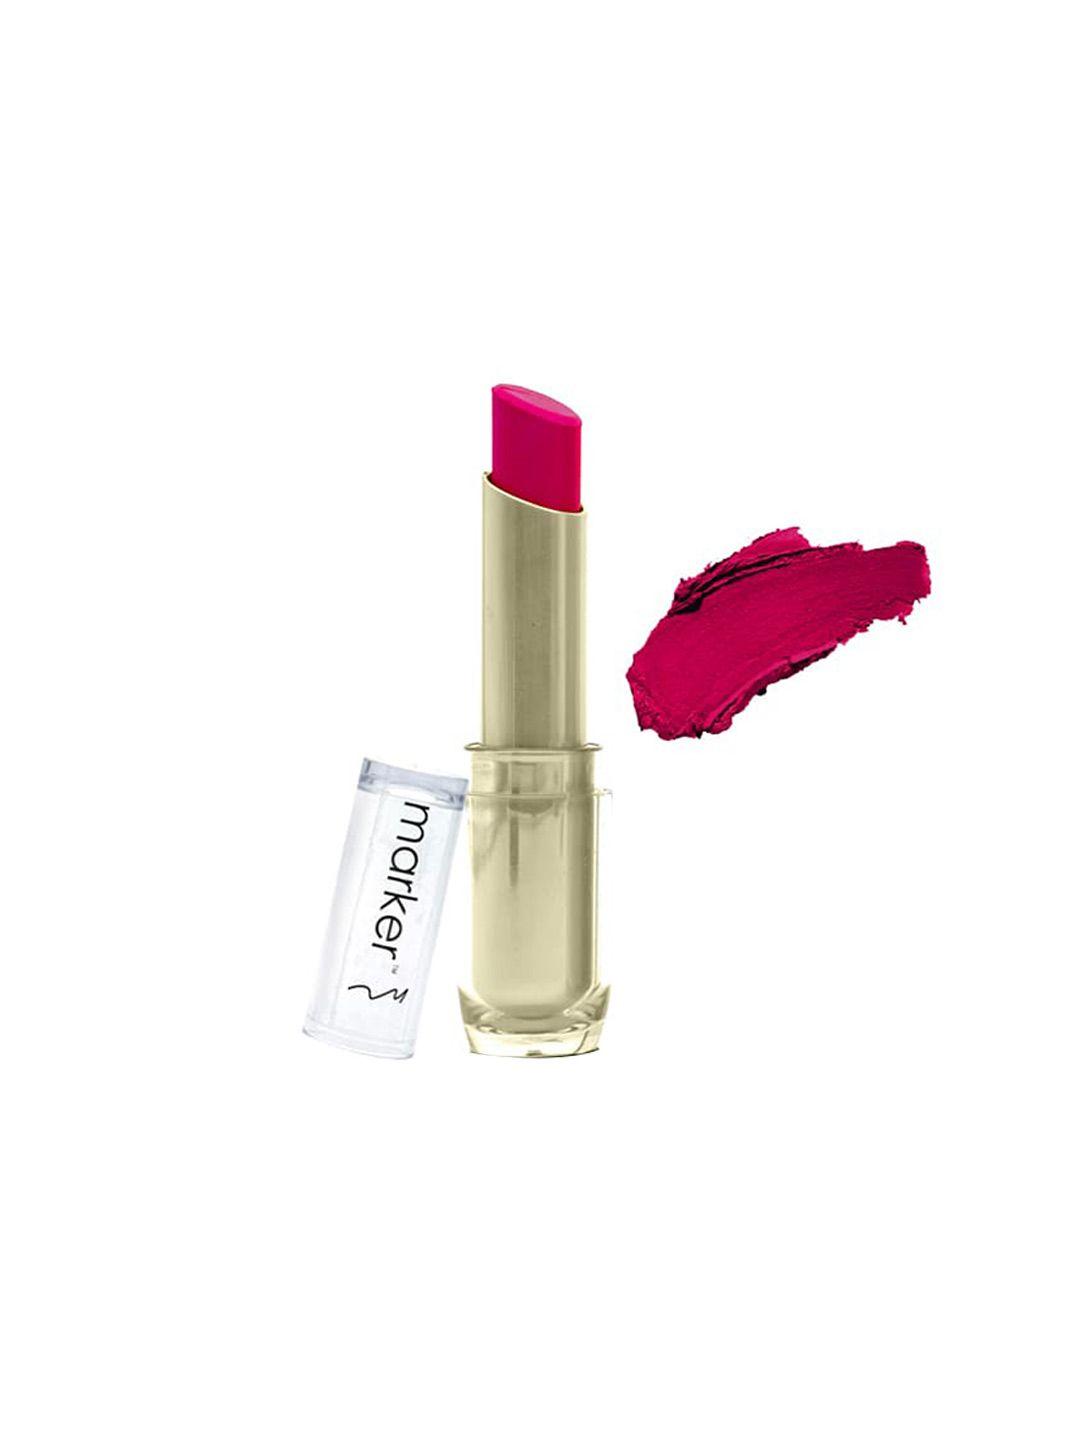 beautyrelay london marker shine glamm lipstick 3.5 g- rock star pink